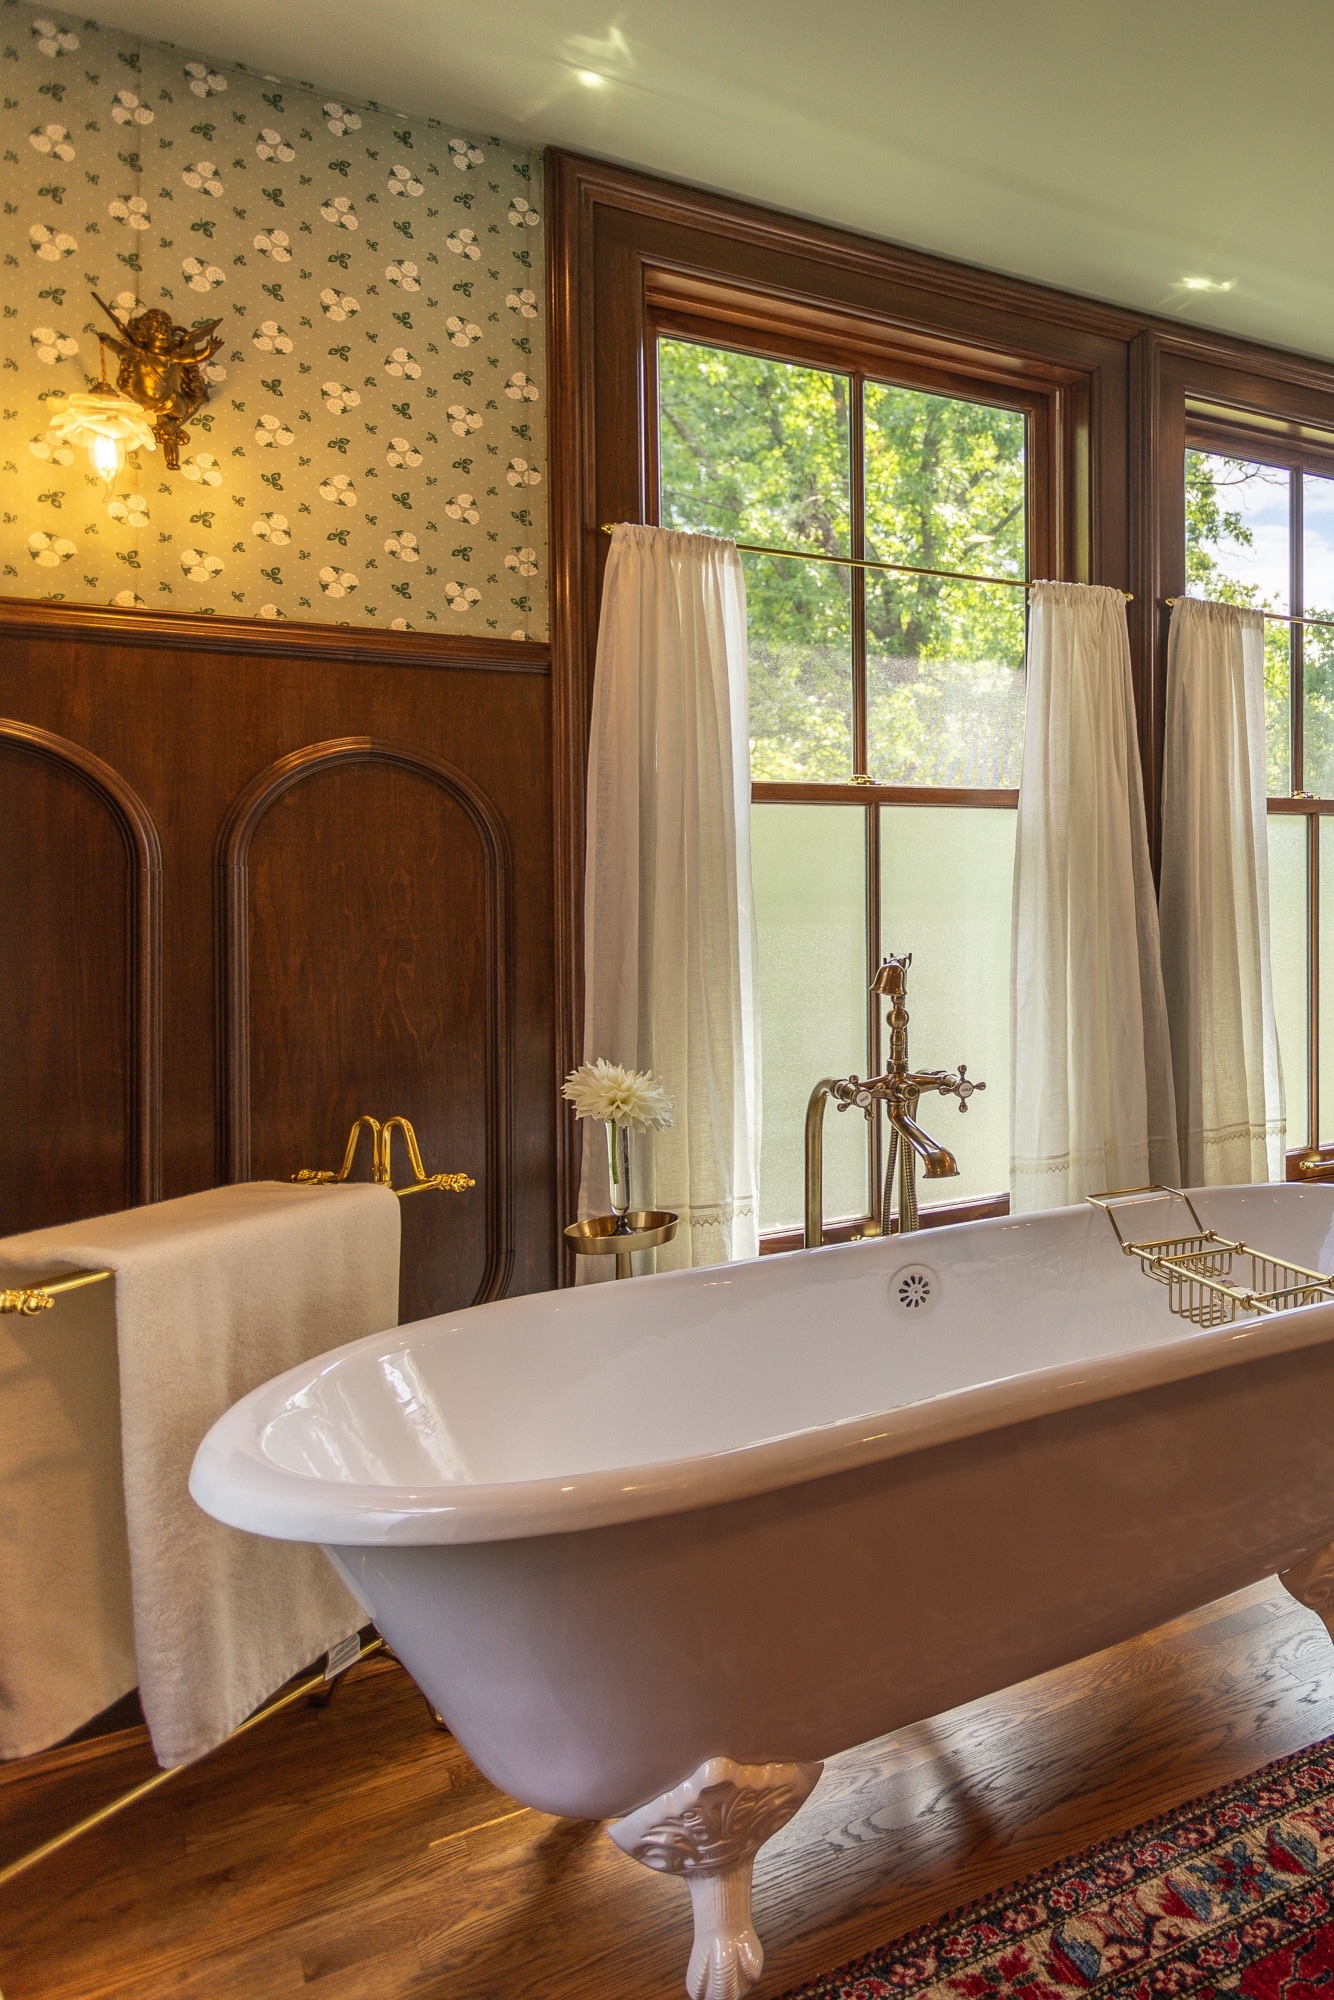 Historic bathroom remodel in Cincinnati area with freestanding tub and brass fixtures